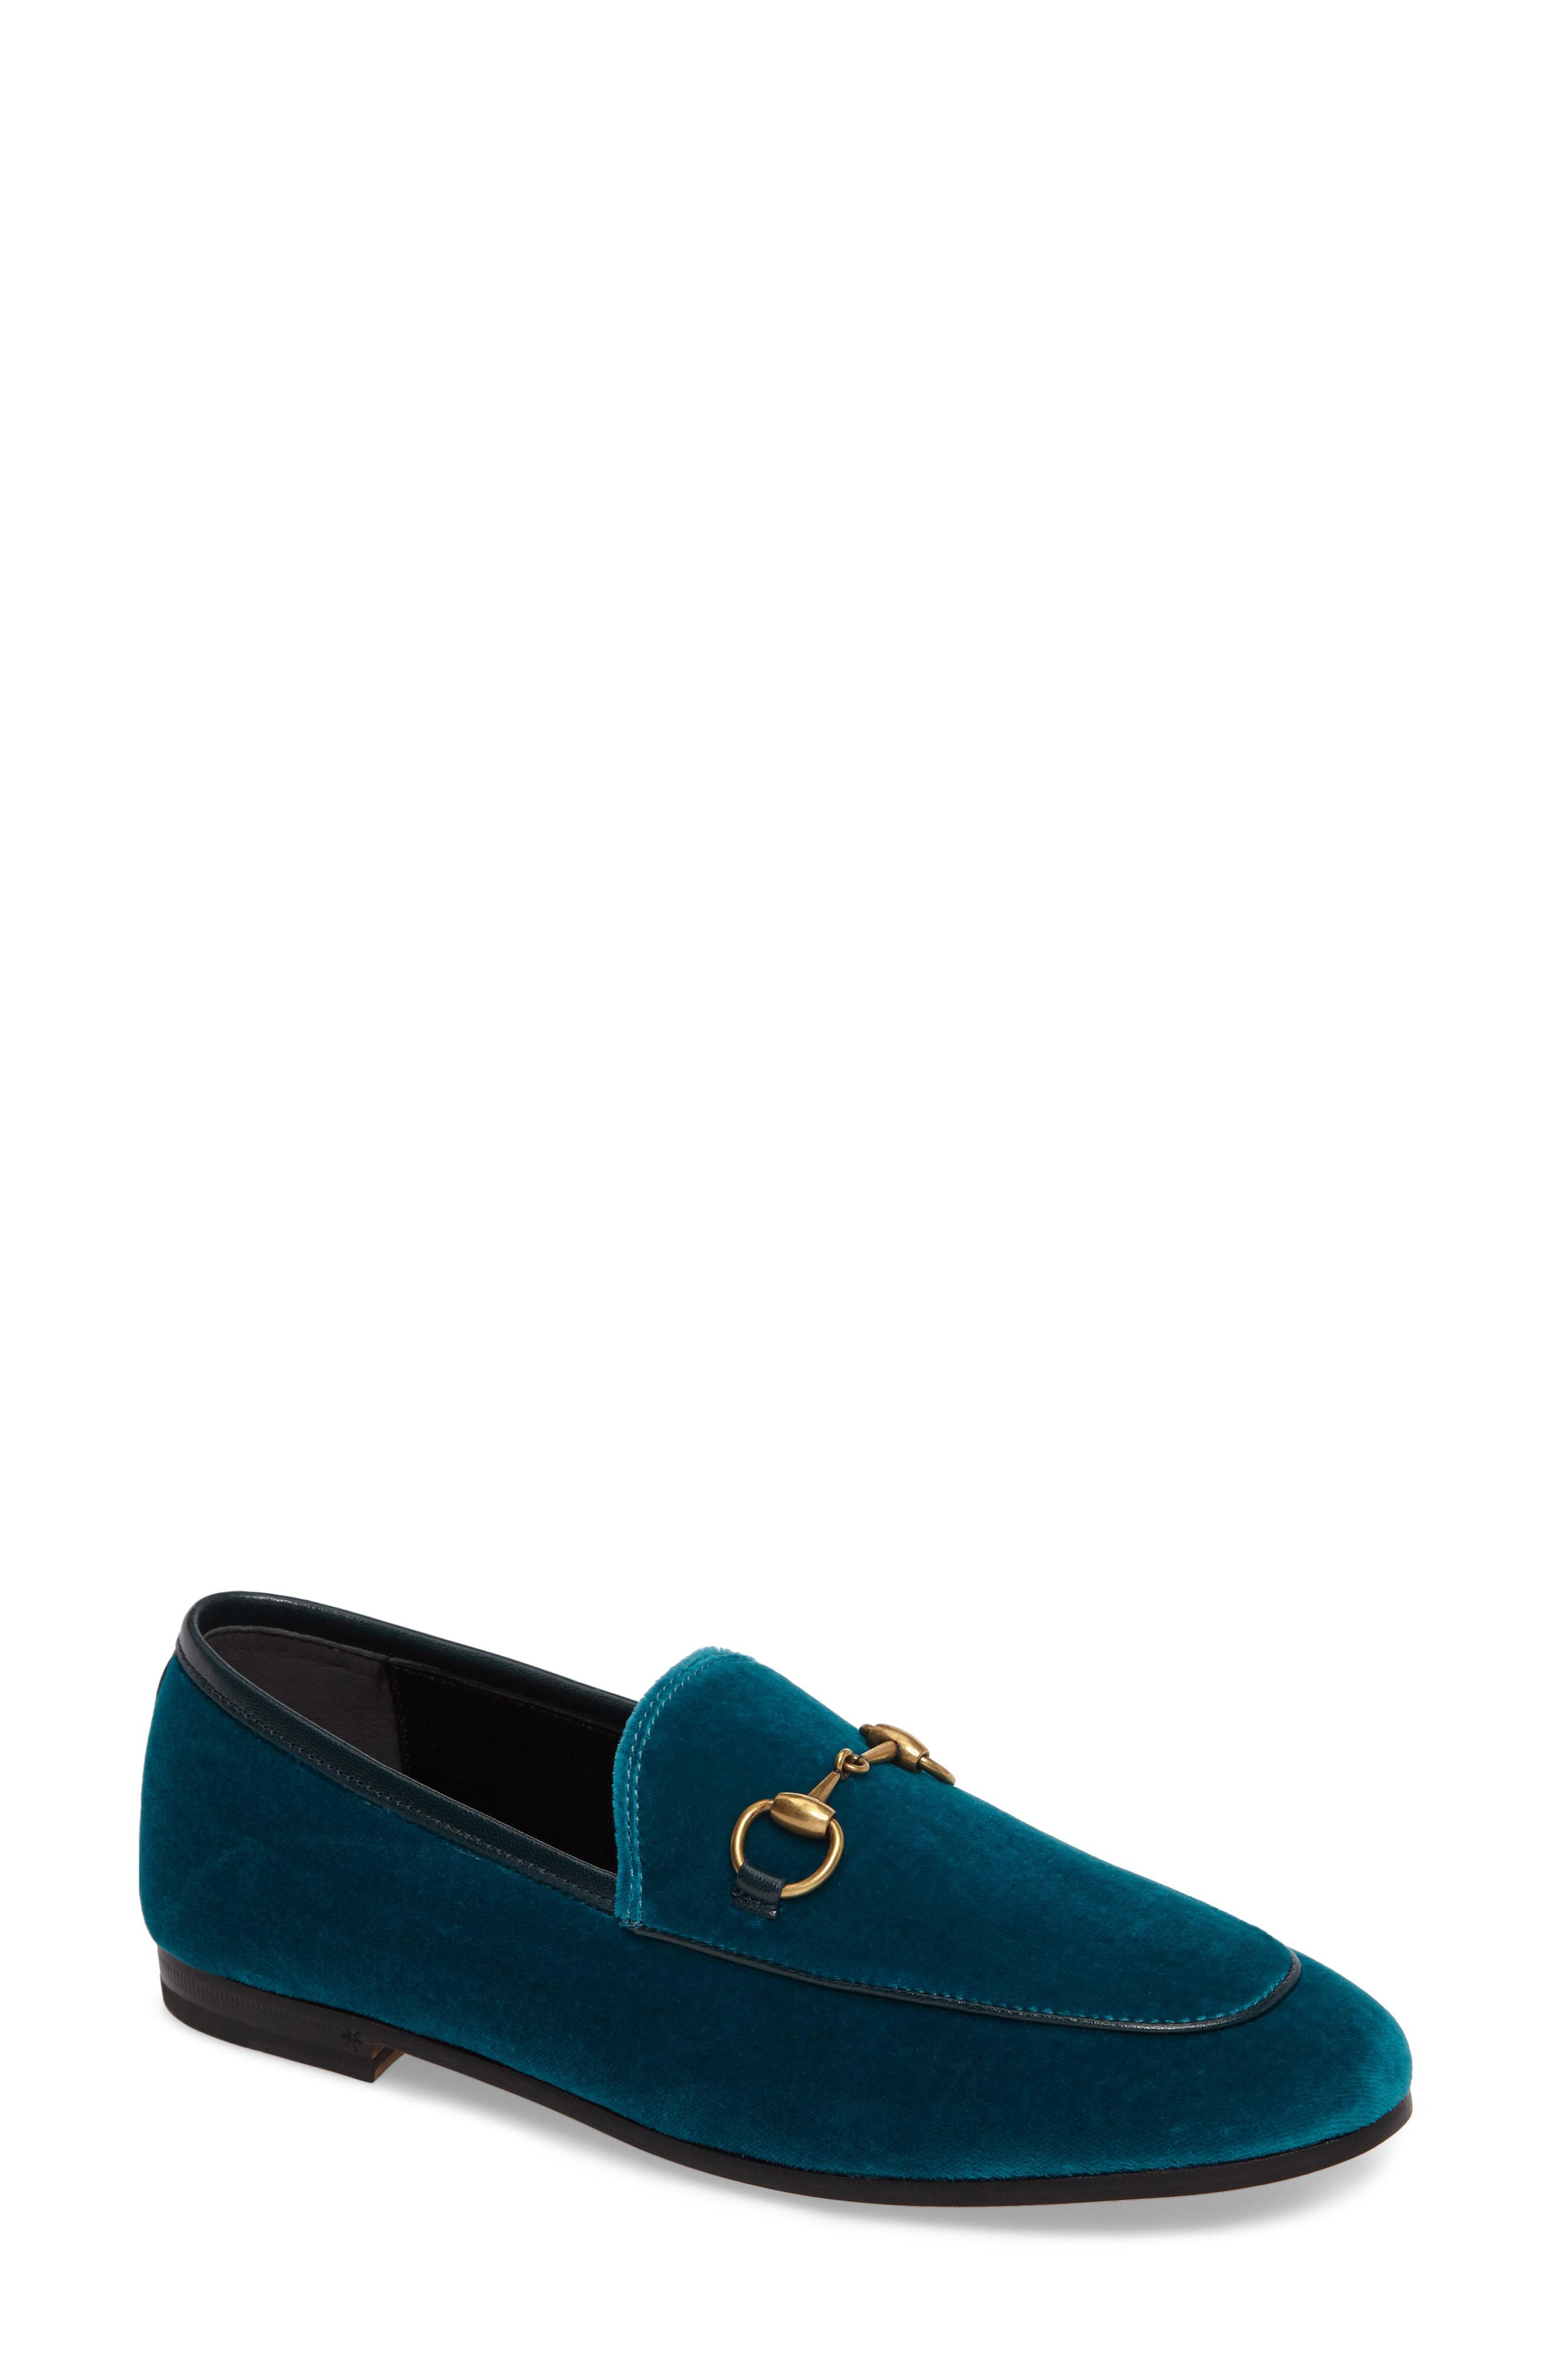 Lyst - Gucci Brixton Velvet Loafer in Blue